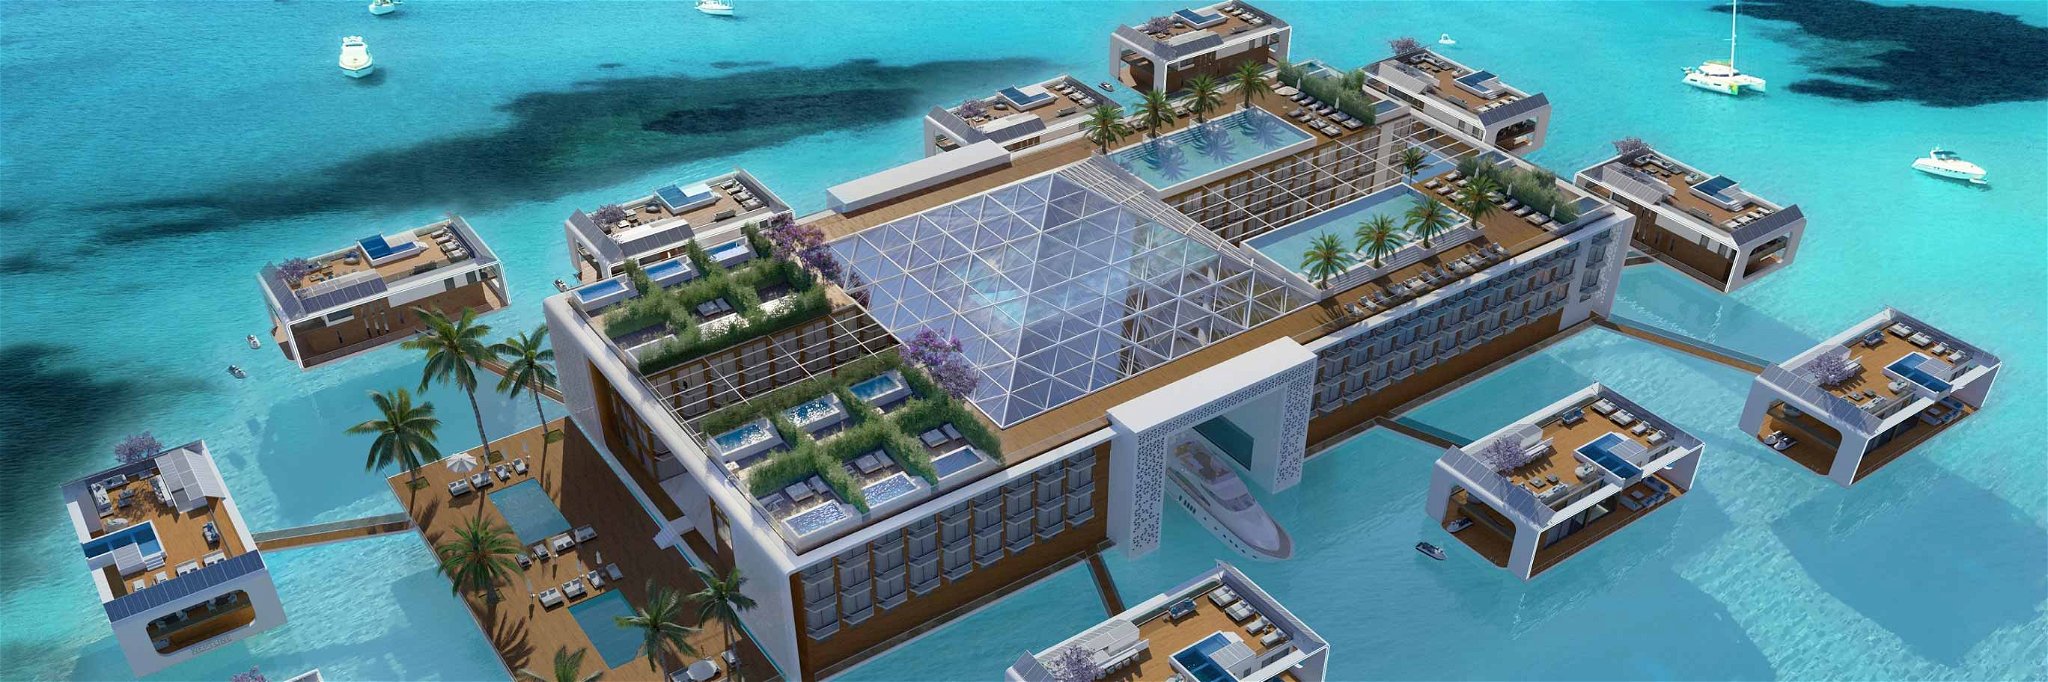 Der Kempinski Floating Palace: ein modernes Atlantis Deluxe?